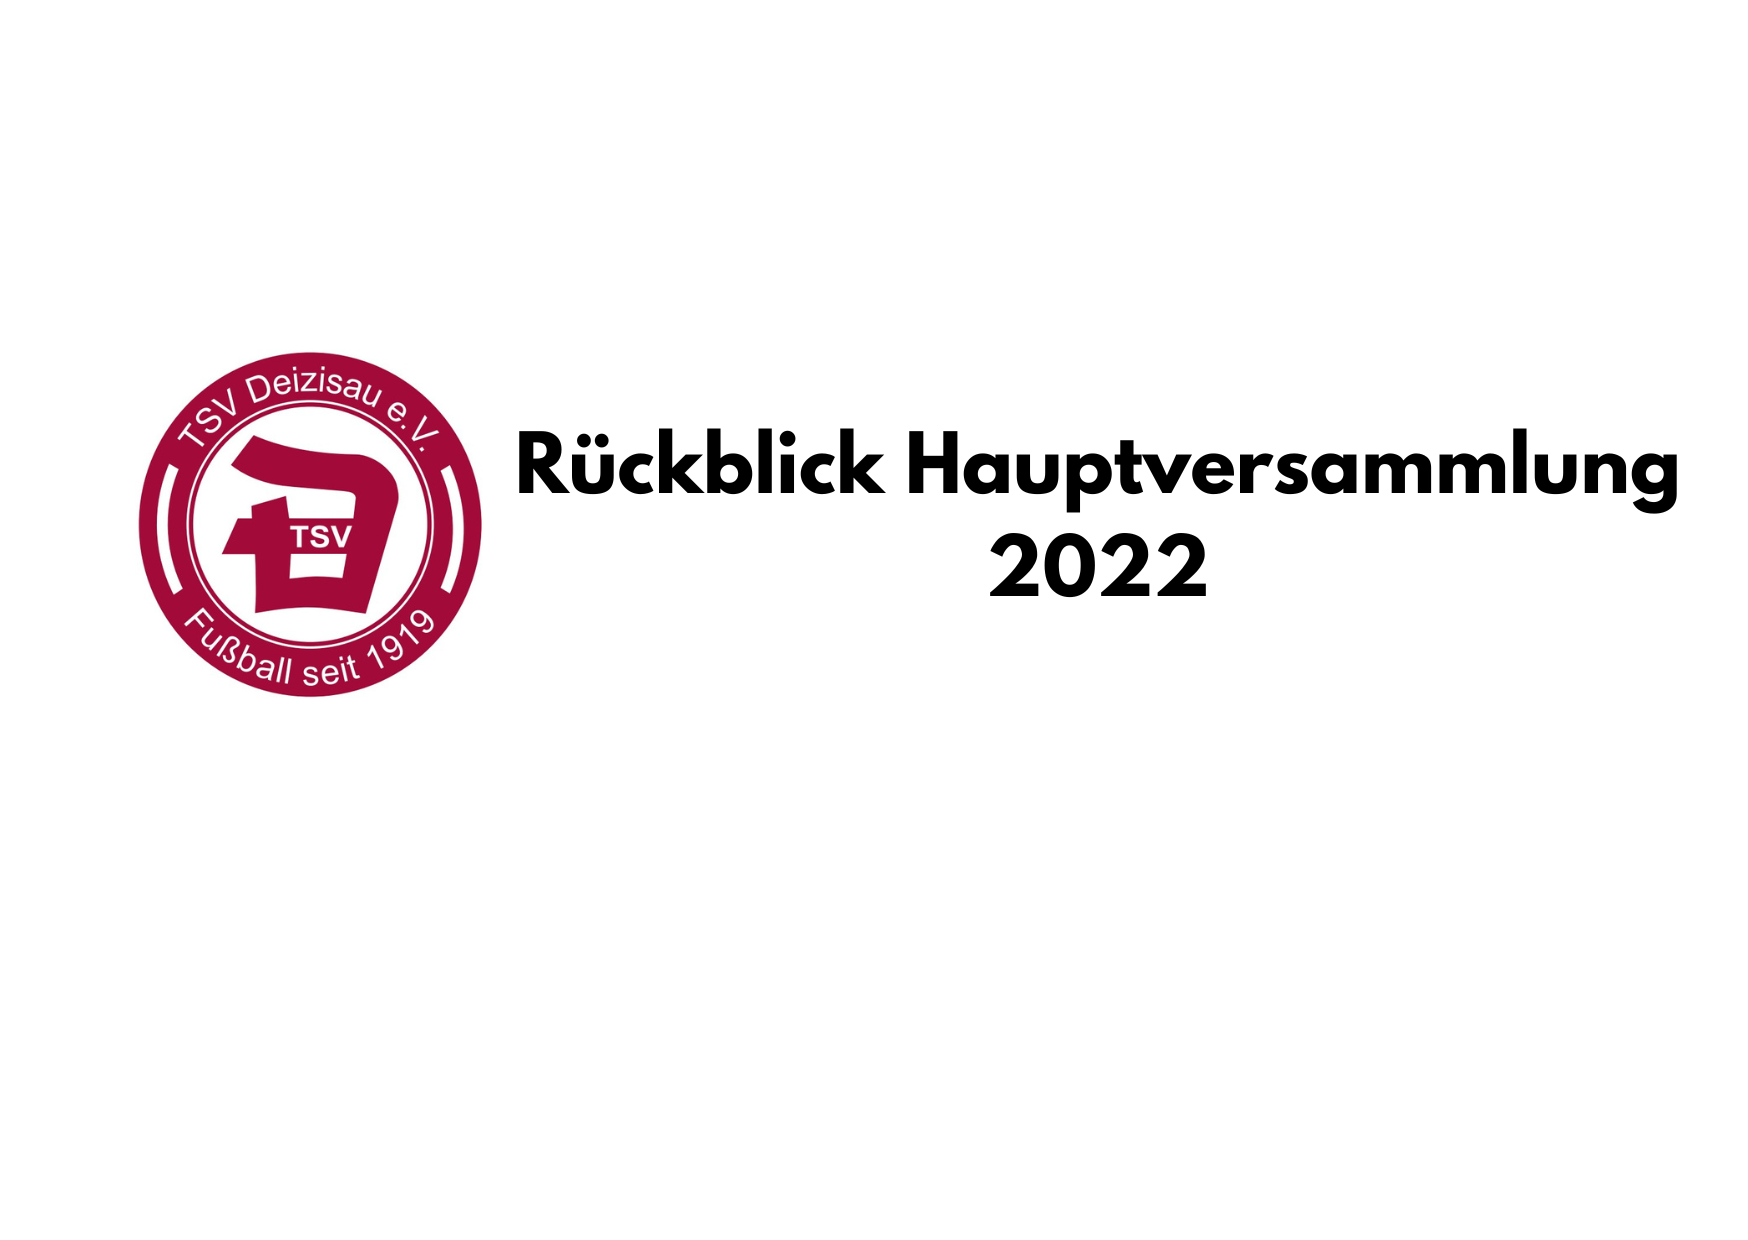 Rückblick Hauptversammlung 2022